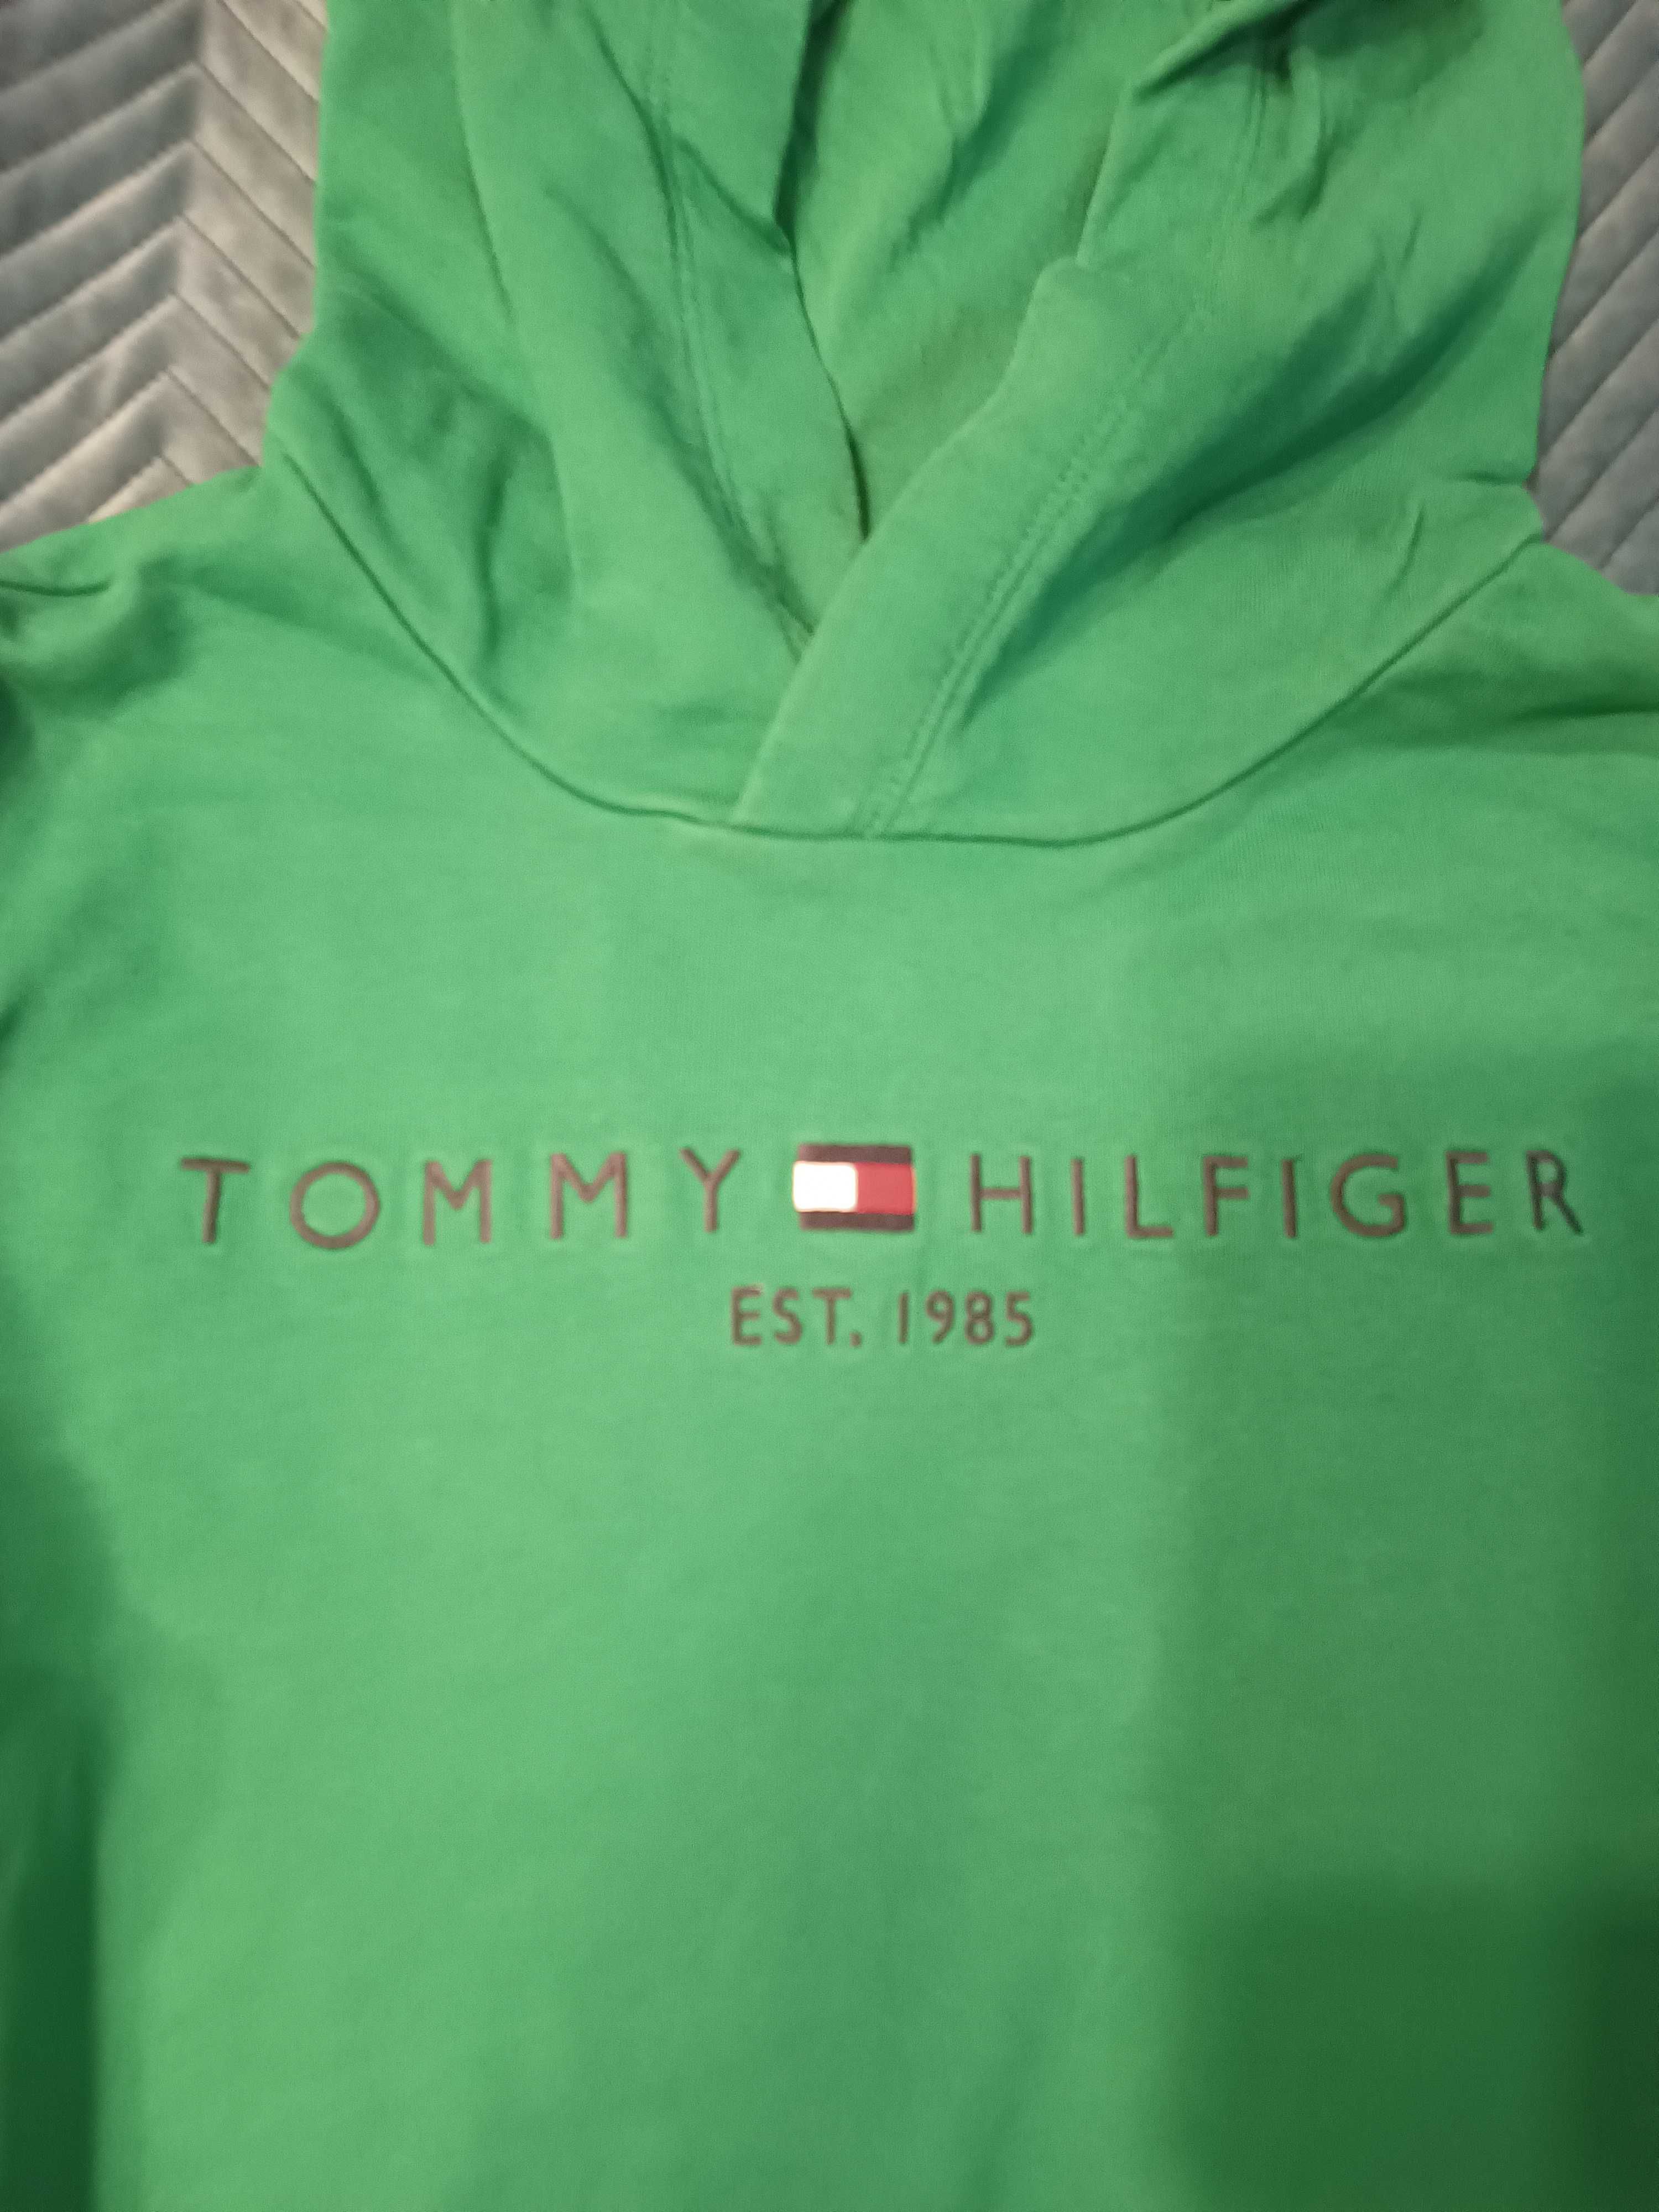 Bluza Tommy Hilfiger rozmiar 164 chlopiec